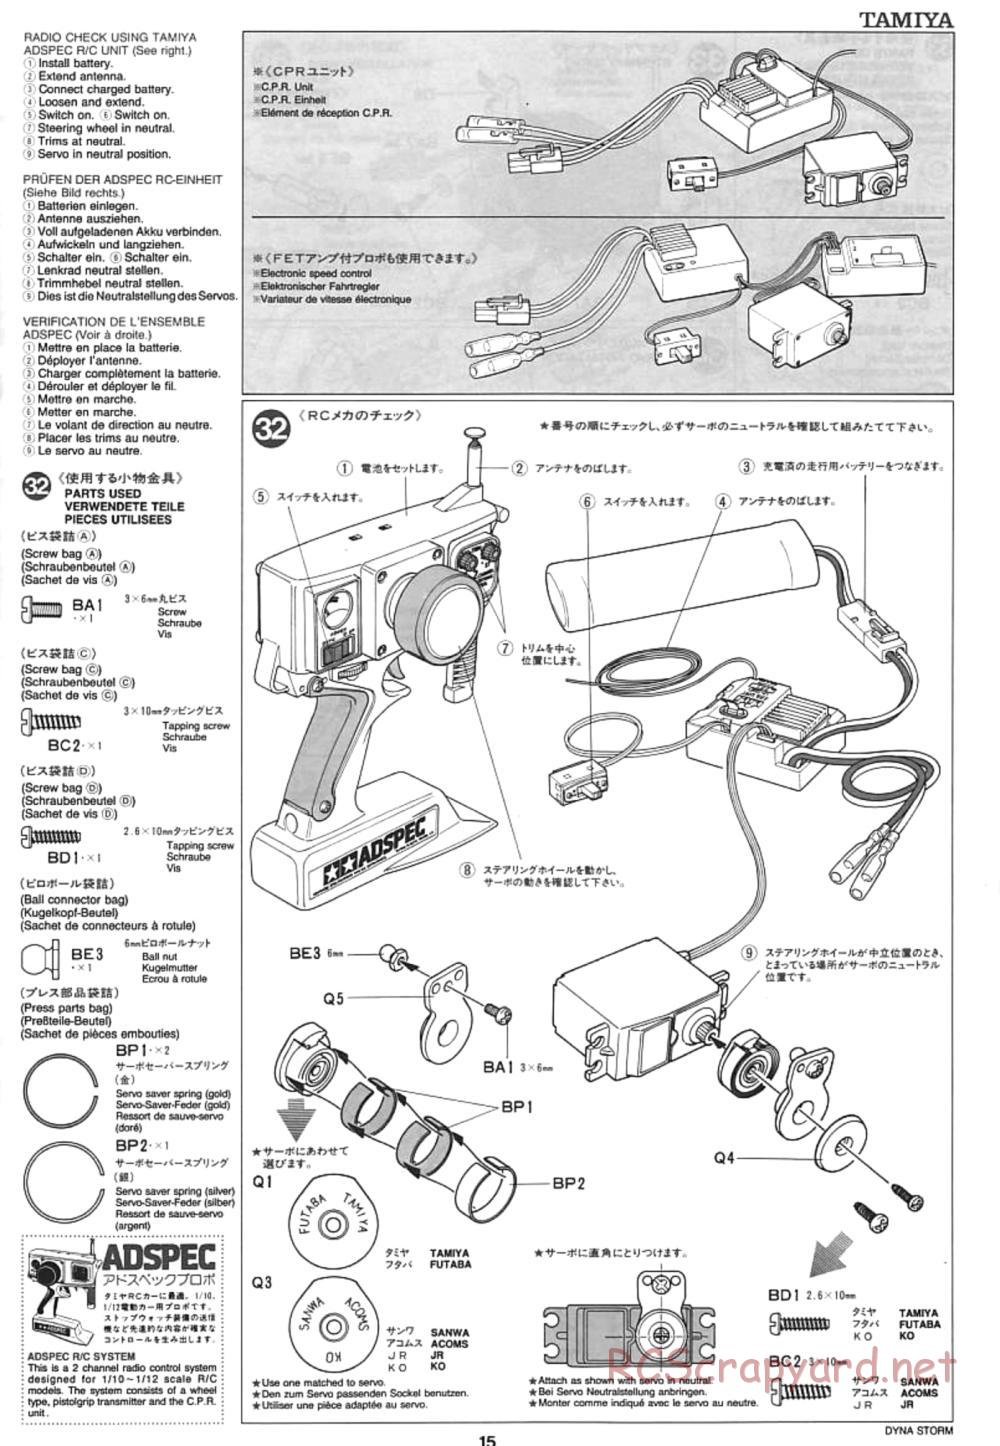 Tamiya - Dyna Storm Chassis - Manual - Page 15